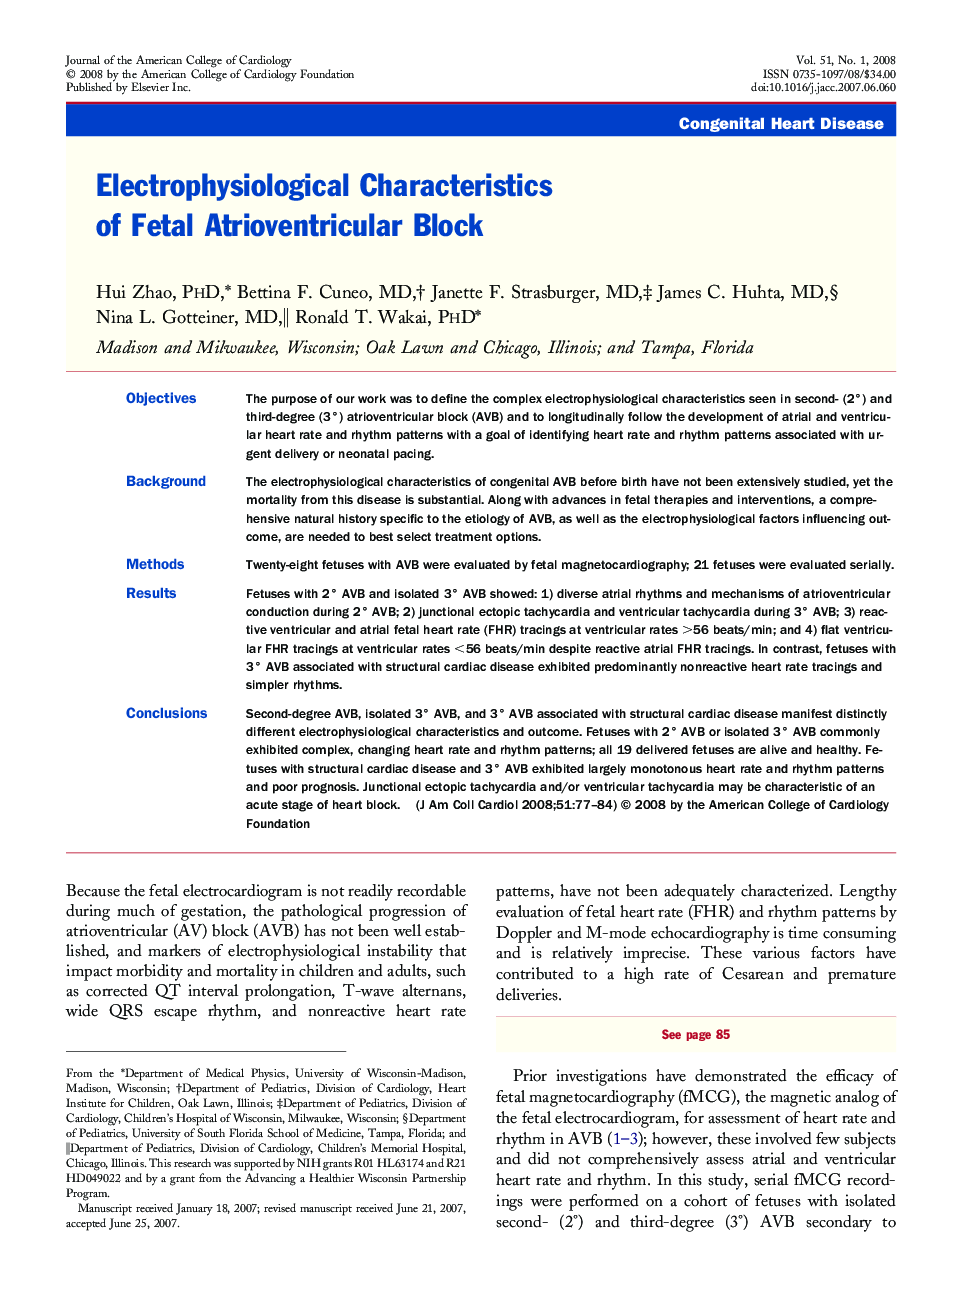 Electrophysiological Characteristics of Fetal Atrioventricular Block 